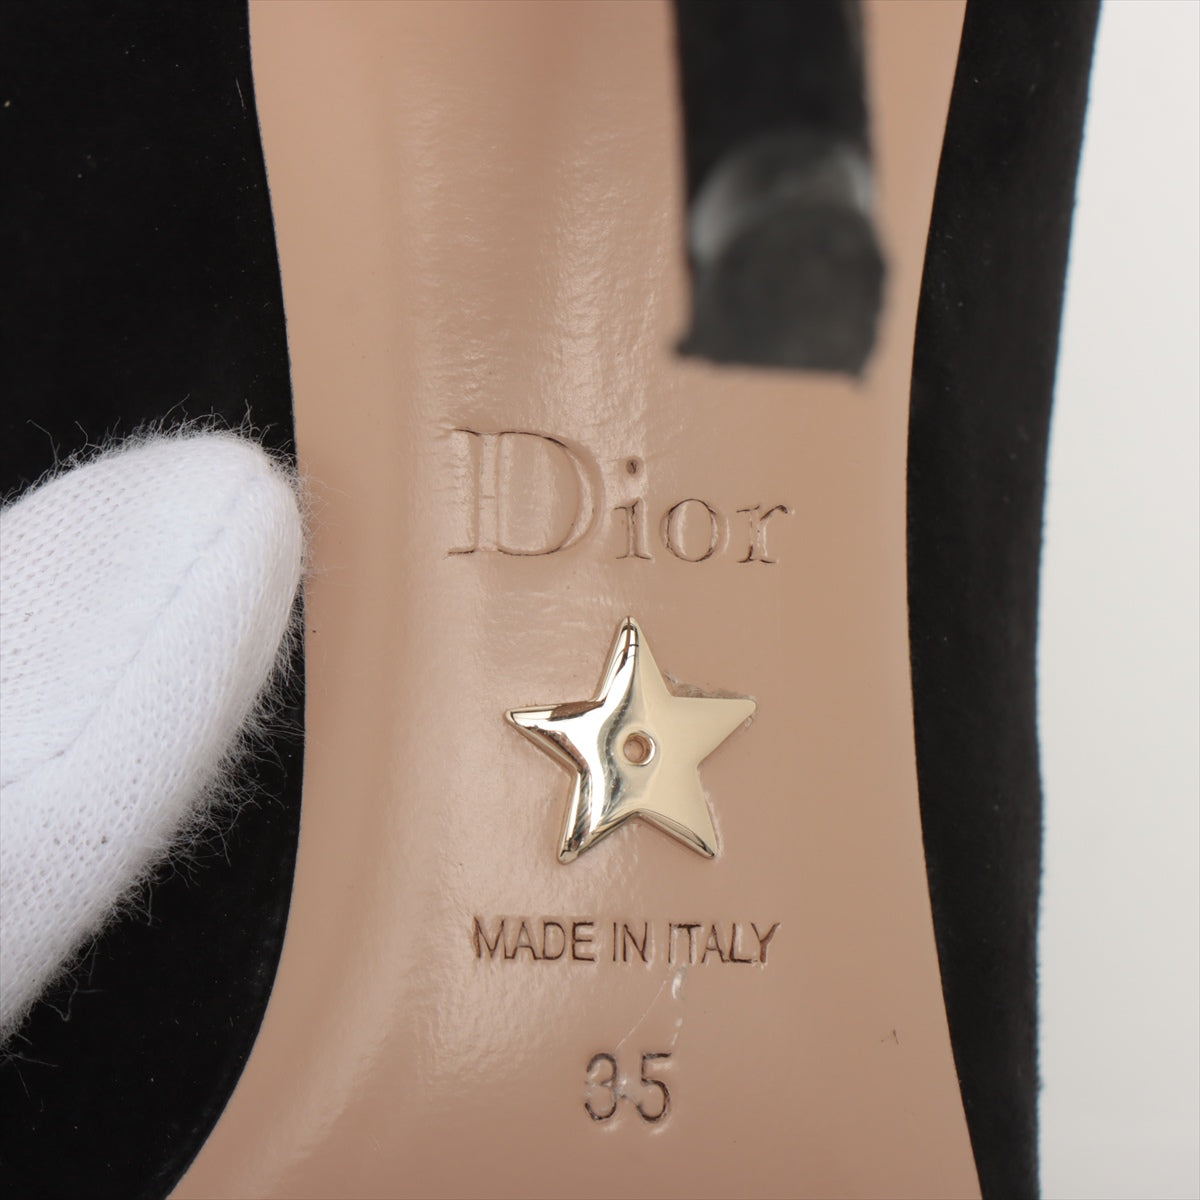 Christian Dior Suede Pumps 35 Black